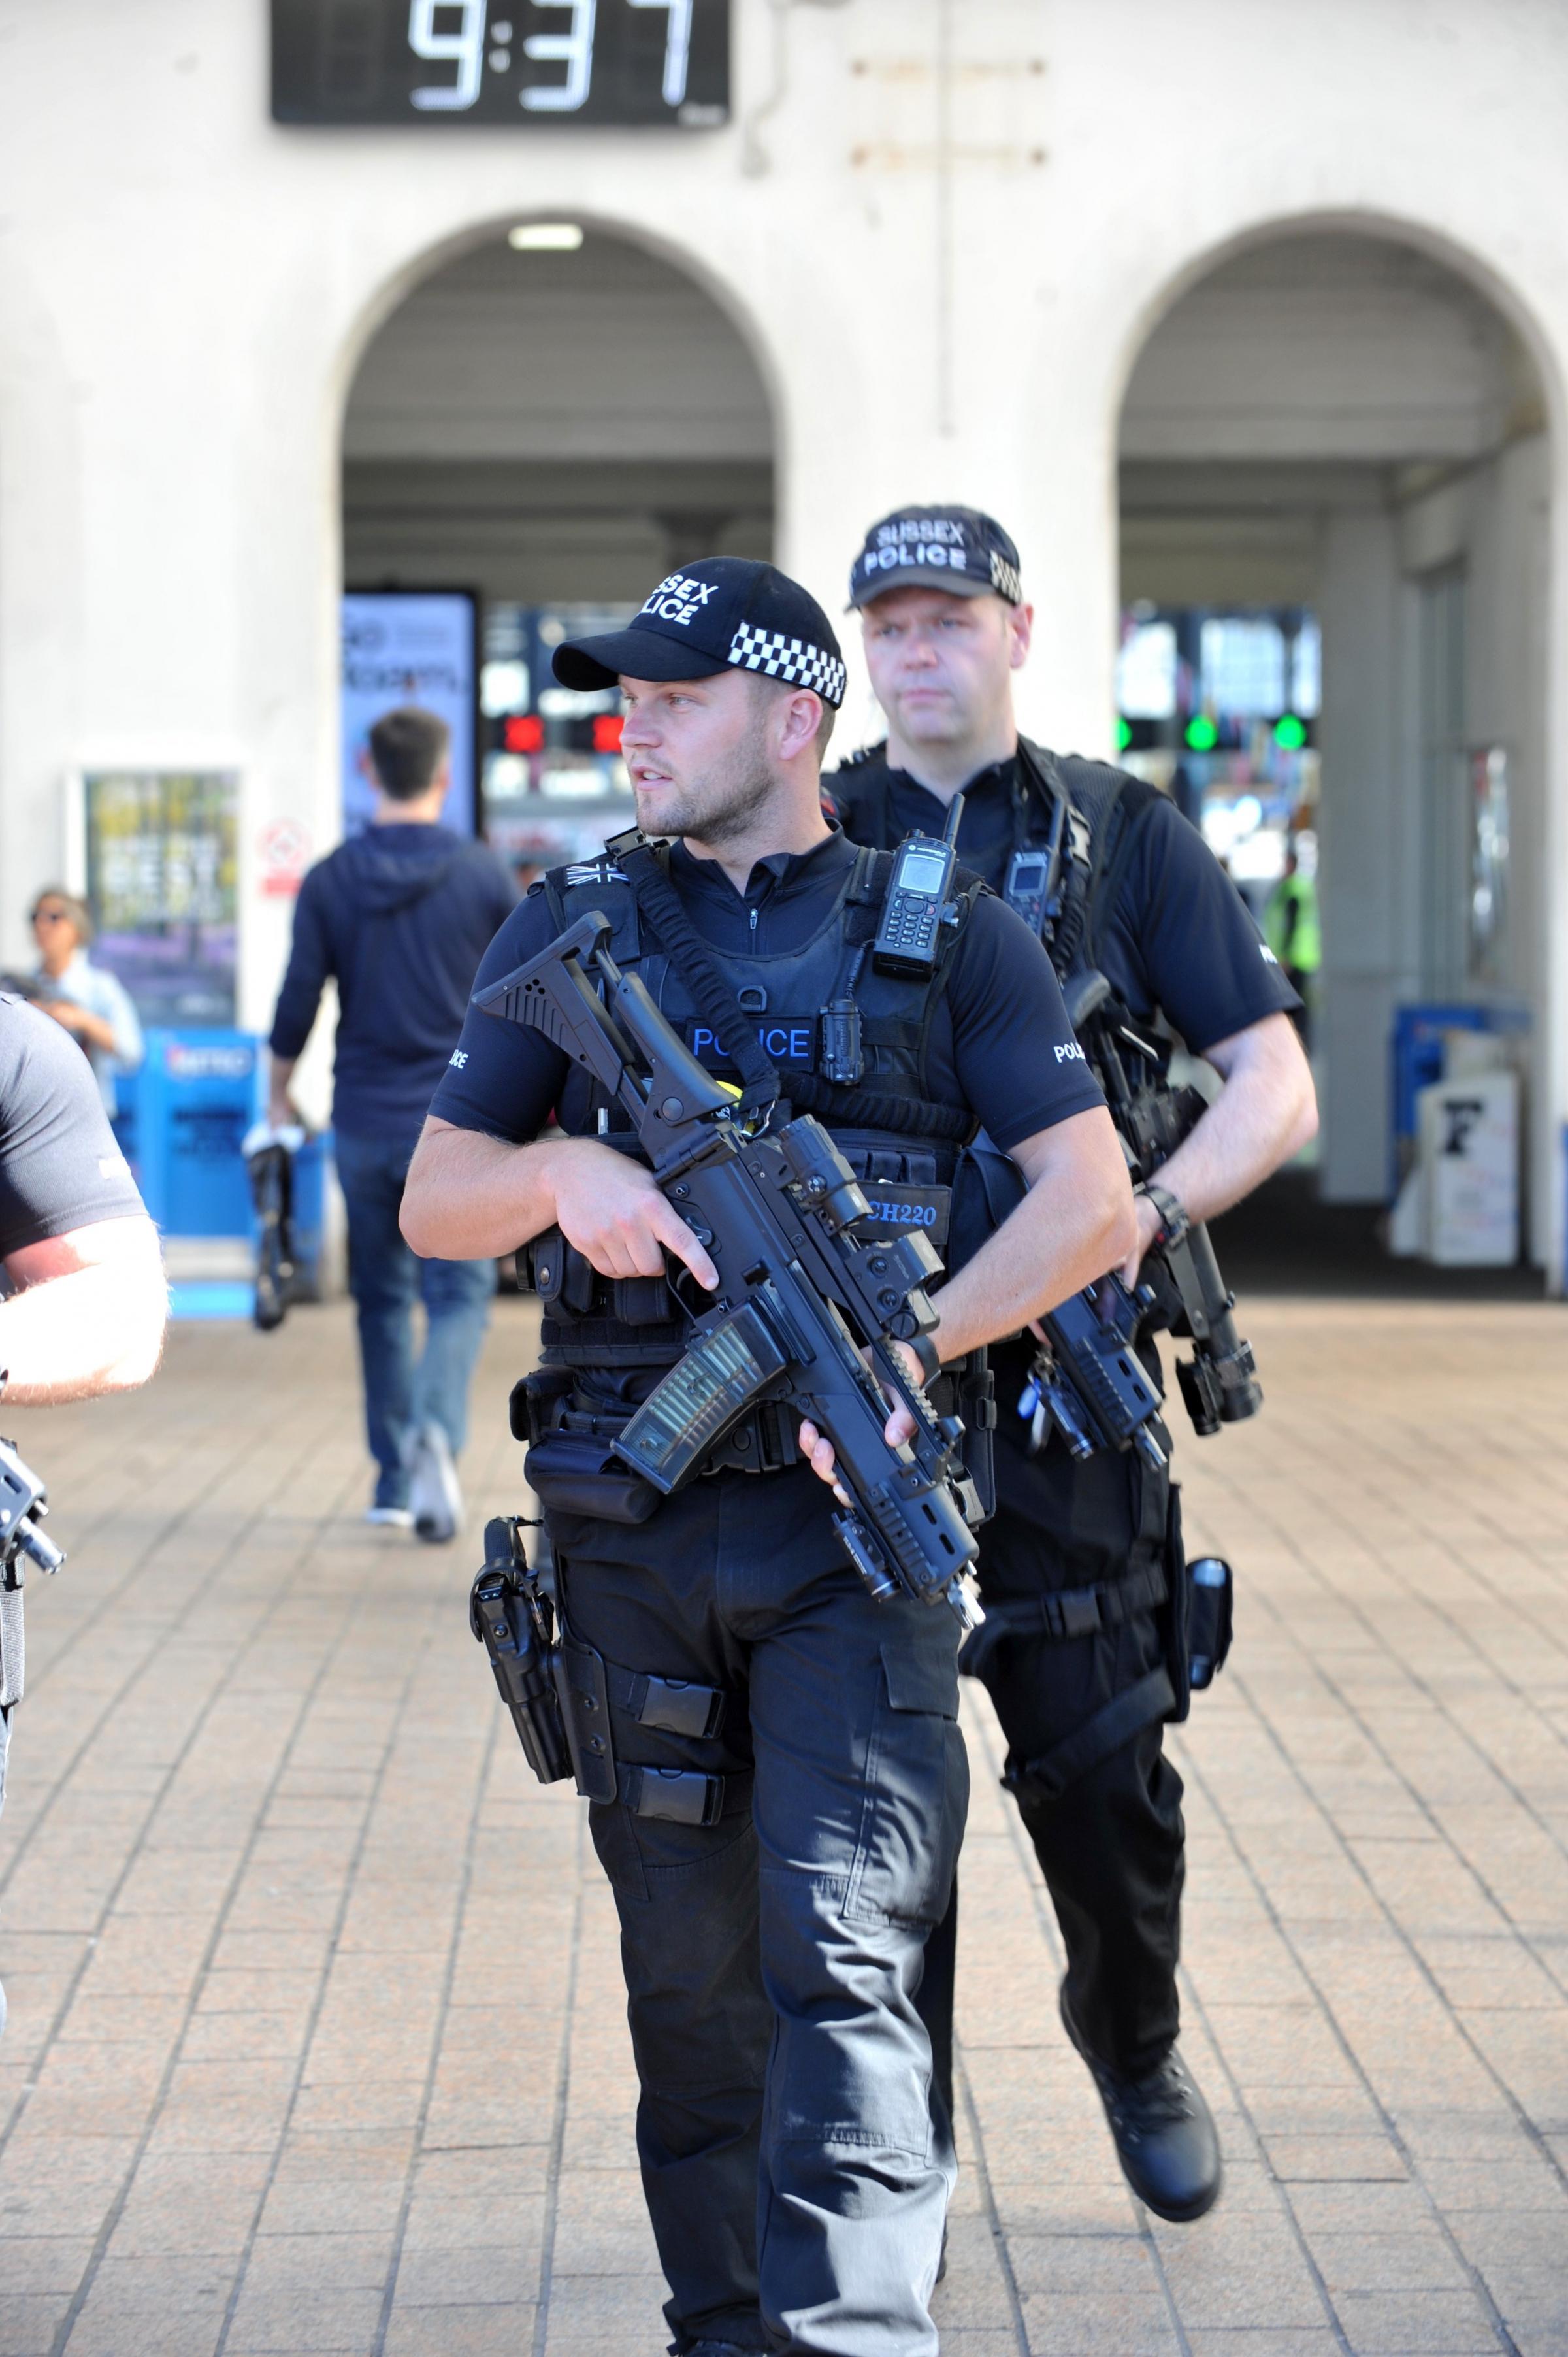 Armed police to offer reassuring presence at Shoreham festival